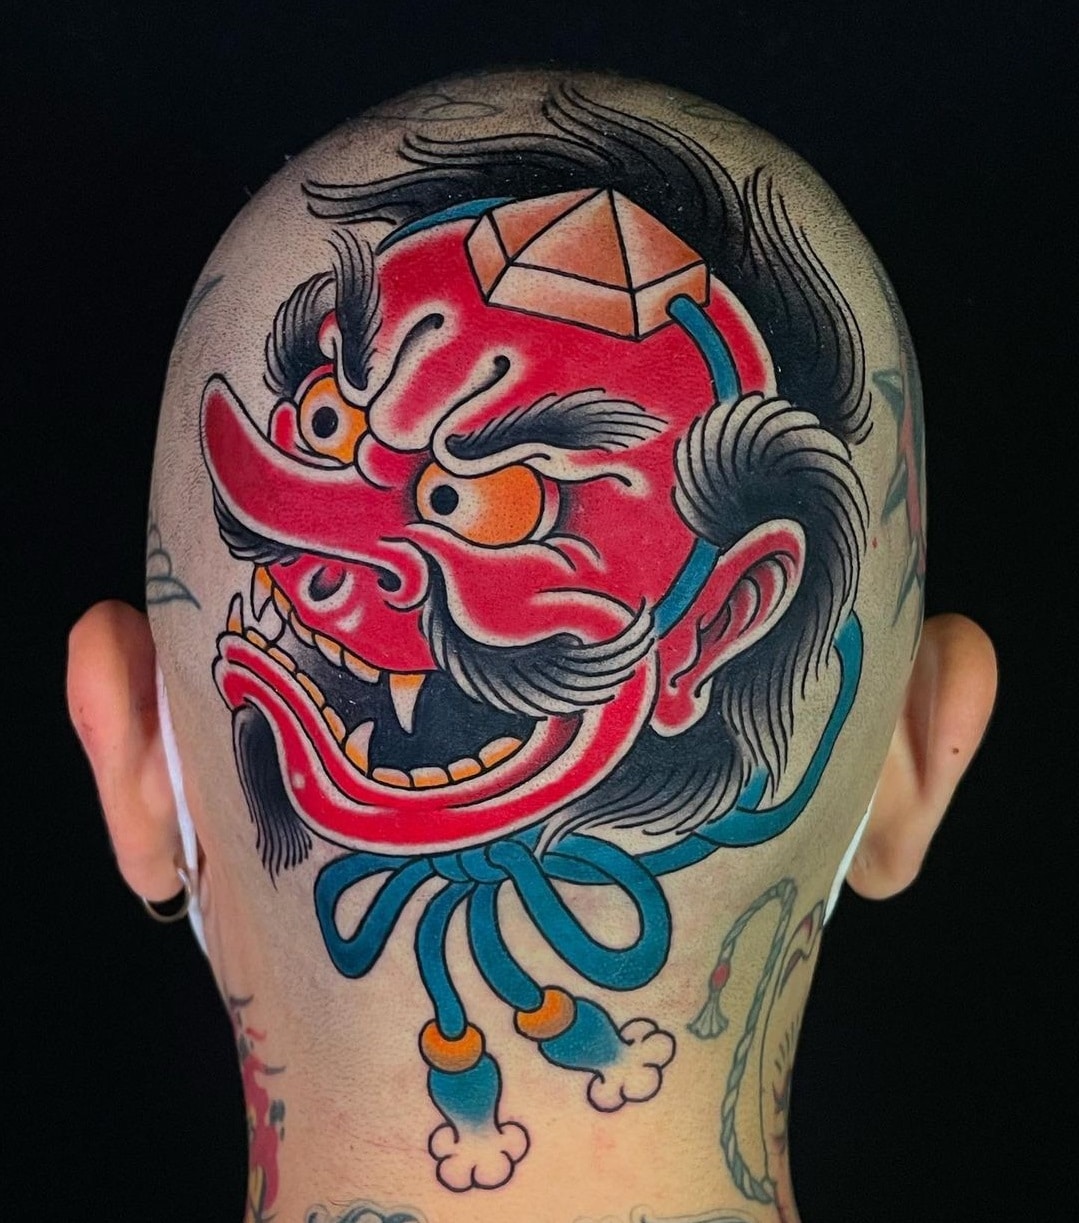 Tengu Mask Tattoos: Origins, Meanings & Tattoo Designs